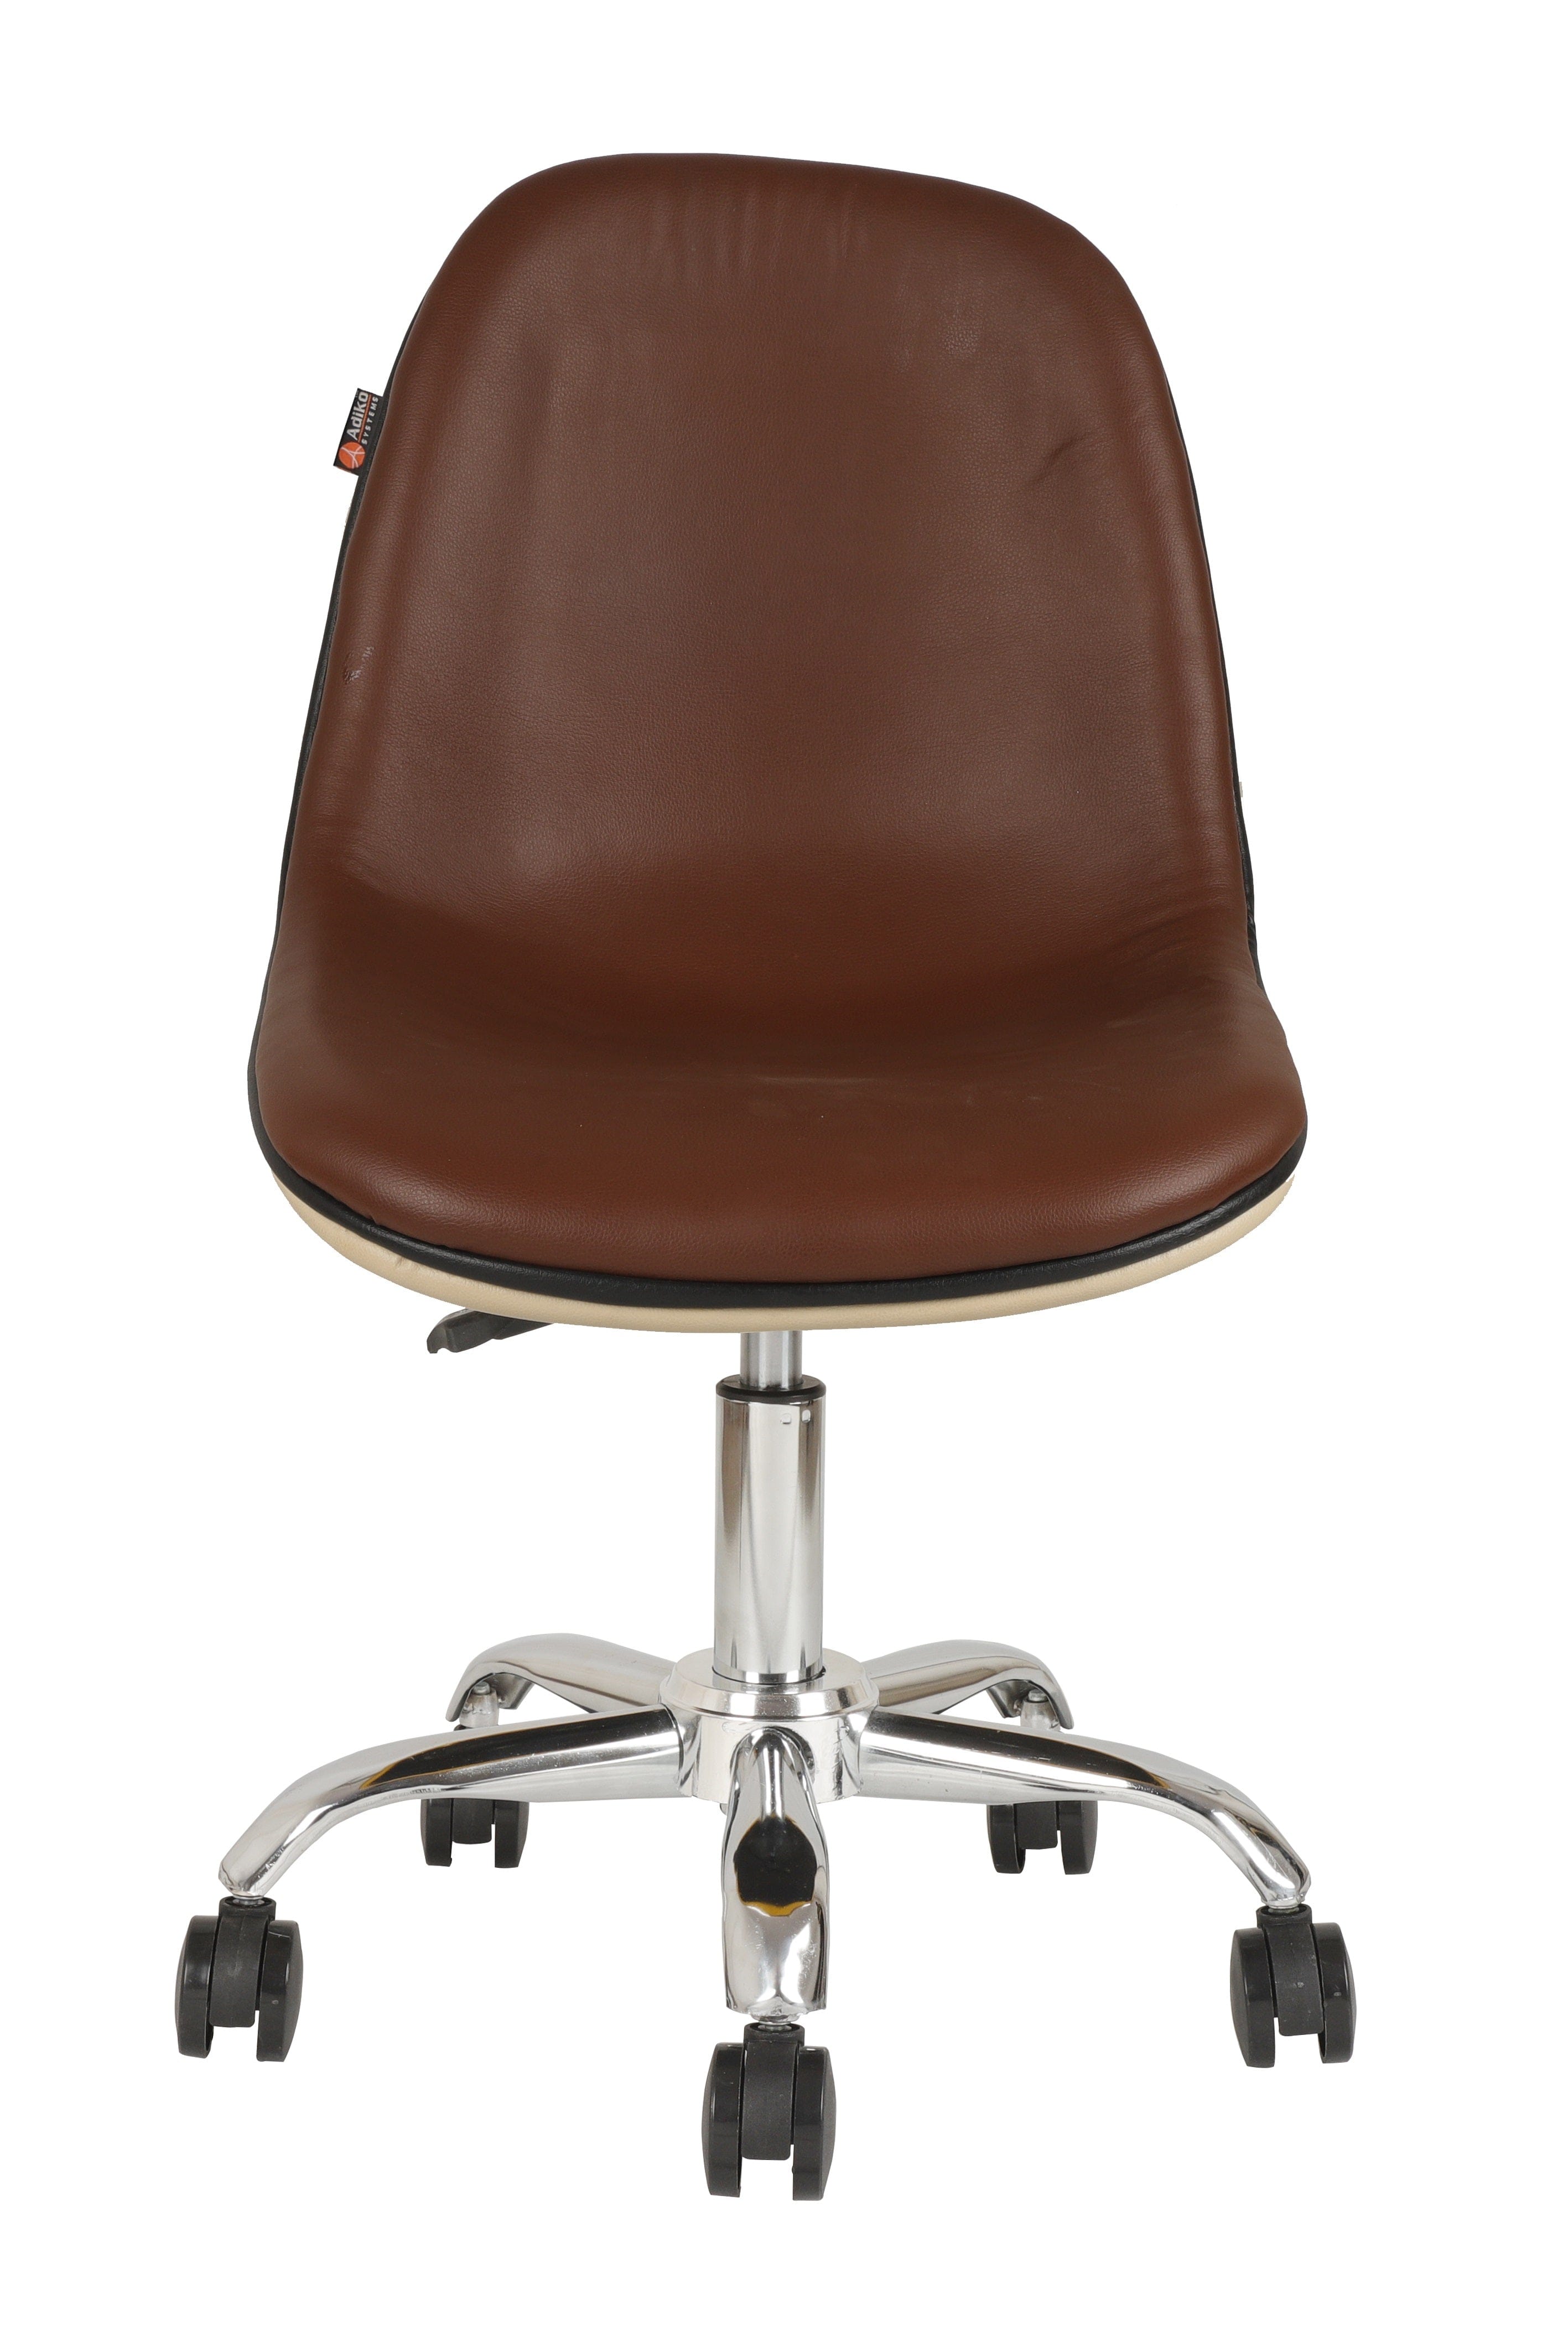 Adiko Lounge Chair in Brown/Cream